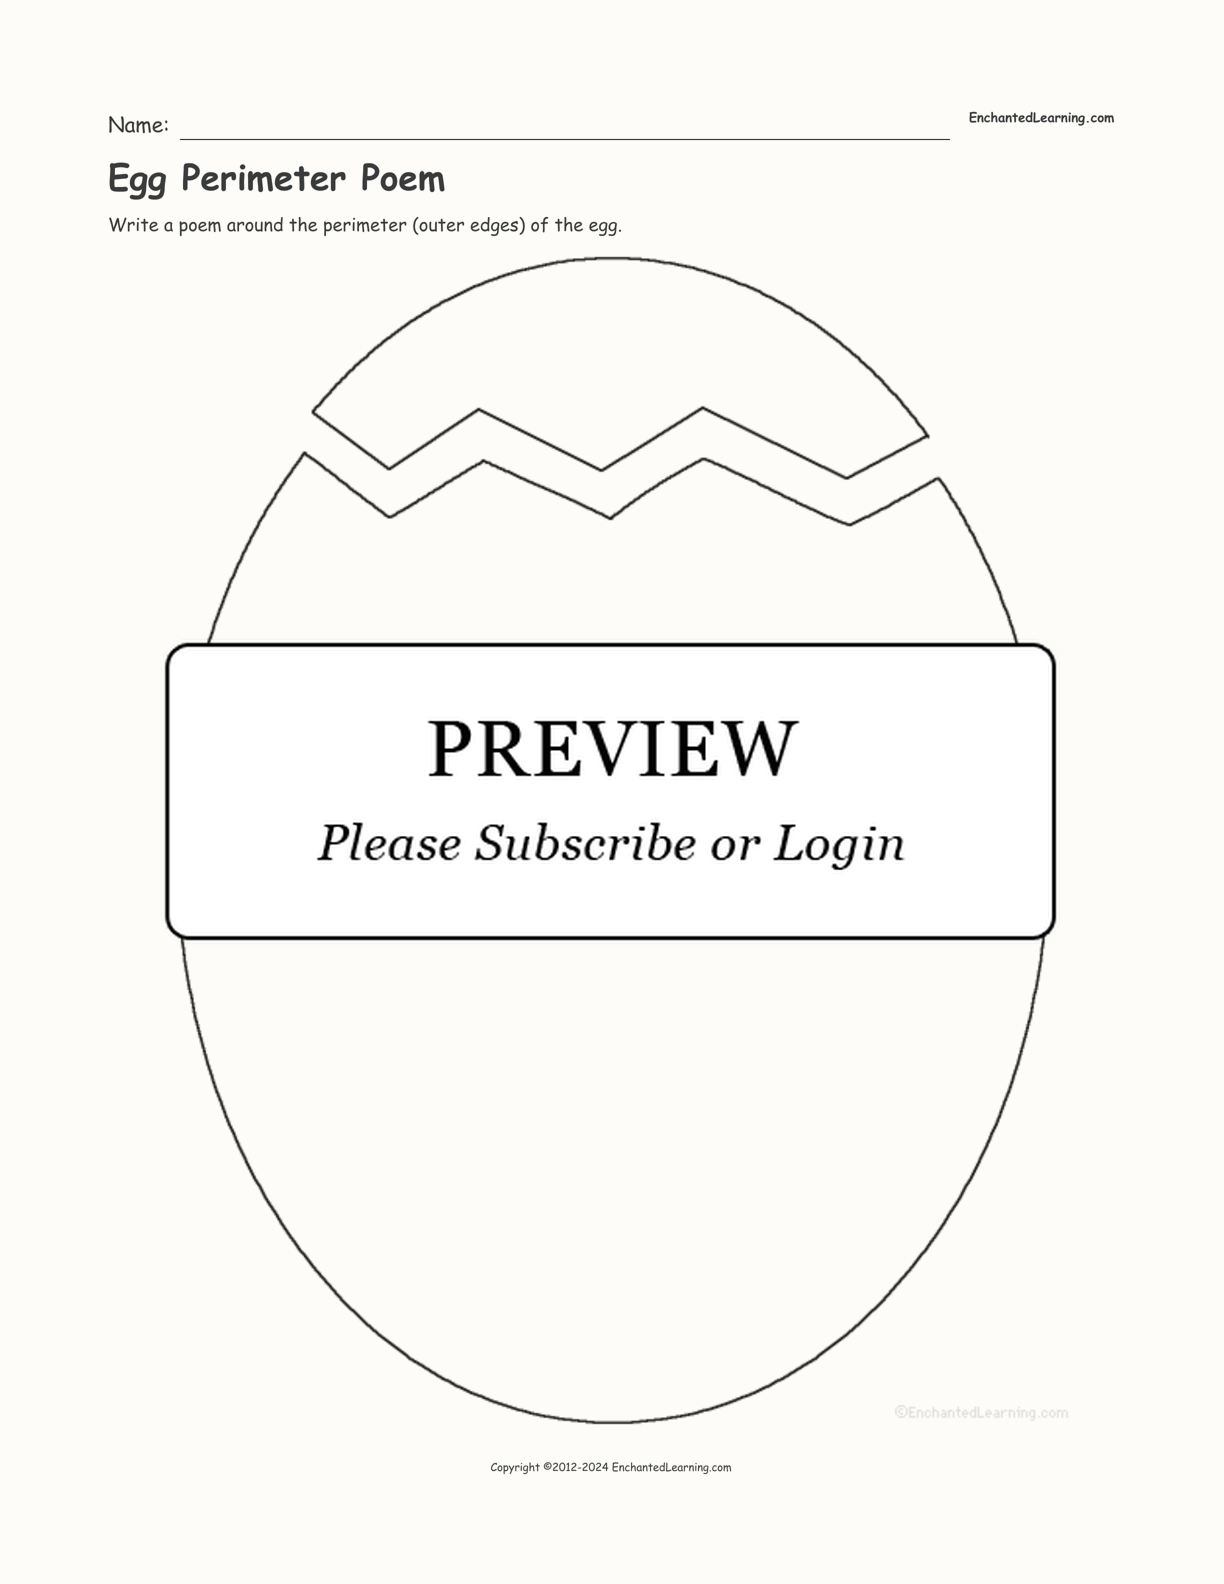 Egg Perimeter Poem interactive worksheet page 1